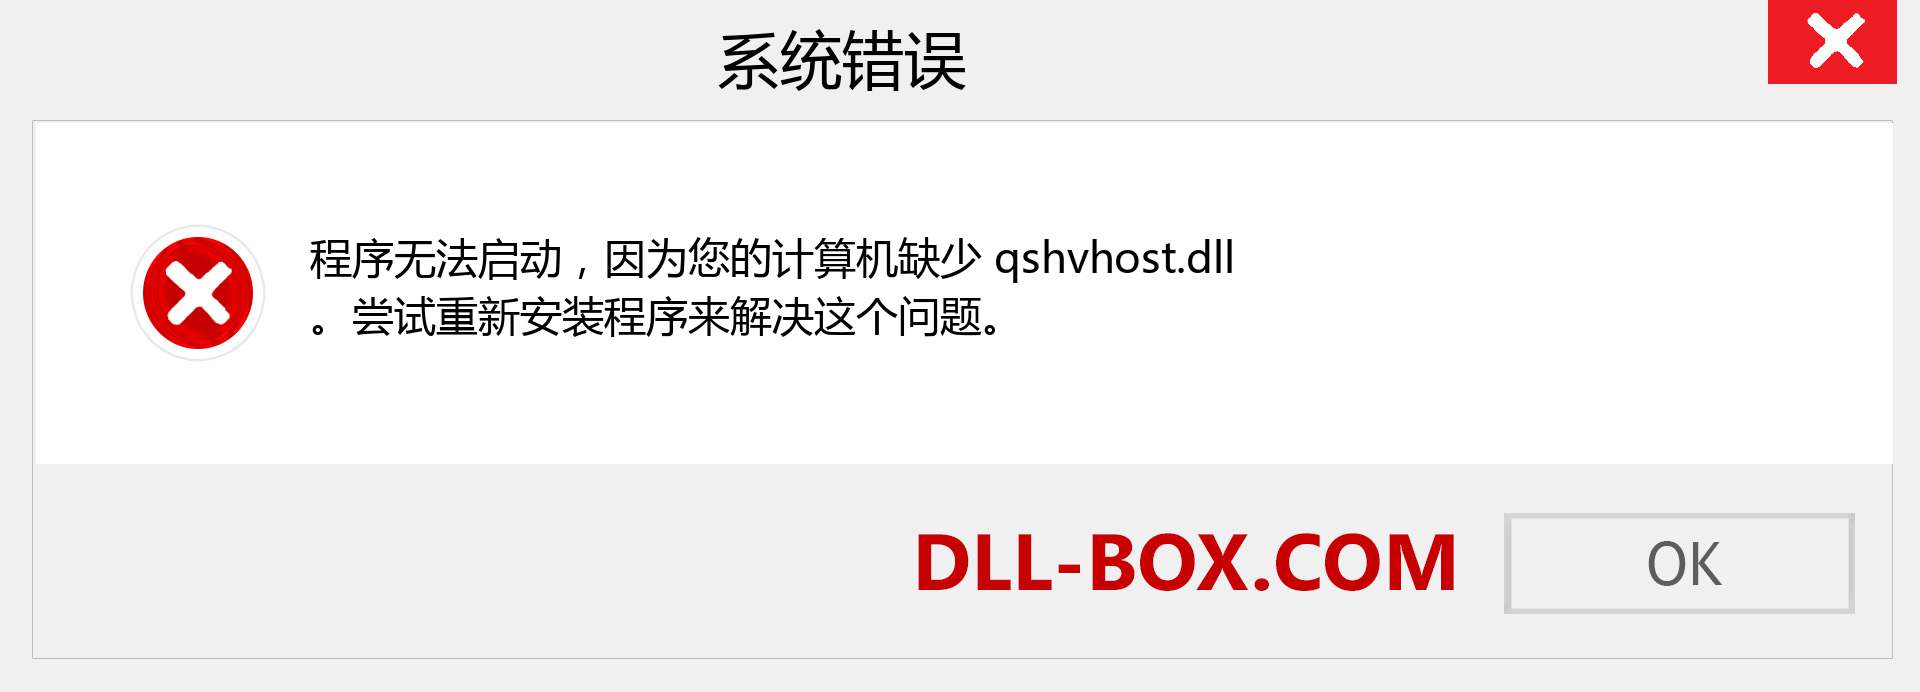 qshvhost.dll 文件丢失？。 适用于 Windows 7、8、10 的下载 - 修复 Windows、照片、图像上的 qshvhost dll 丢失错误